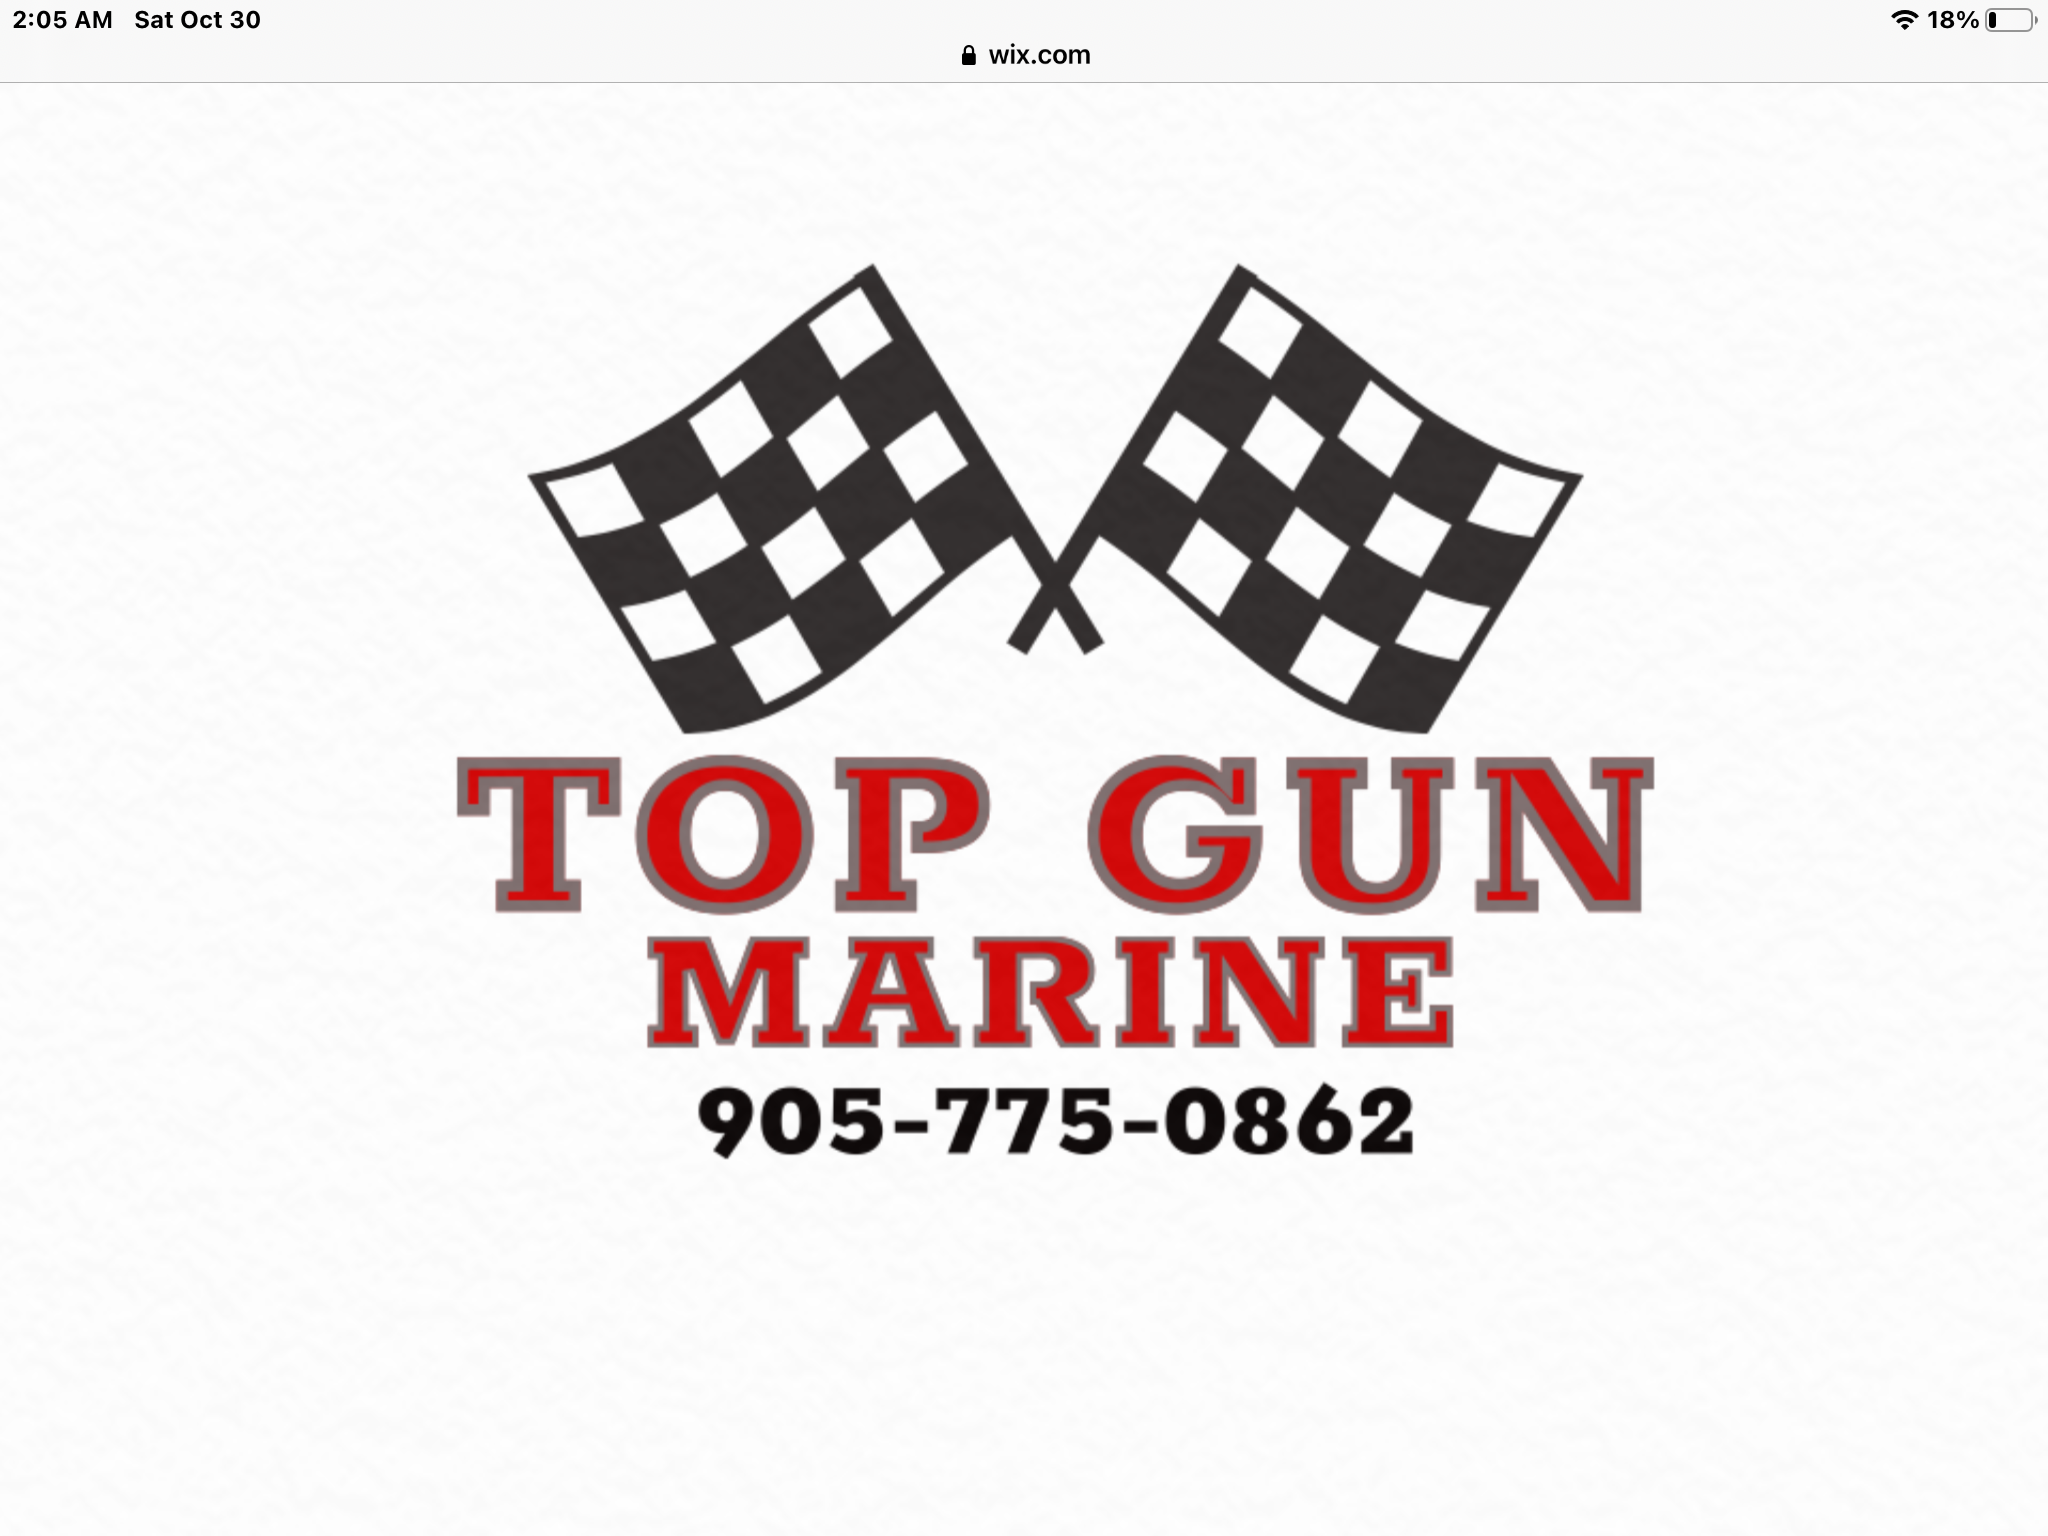 Top Gun Marine